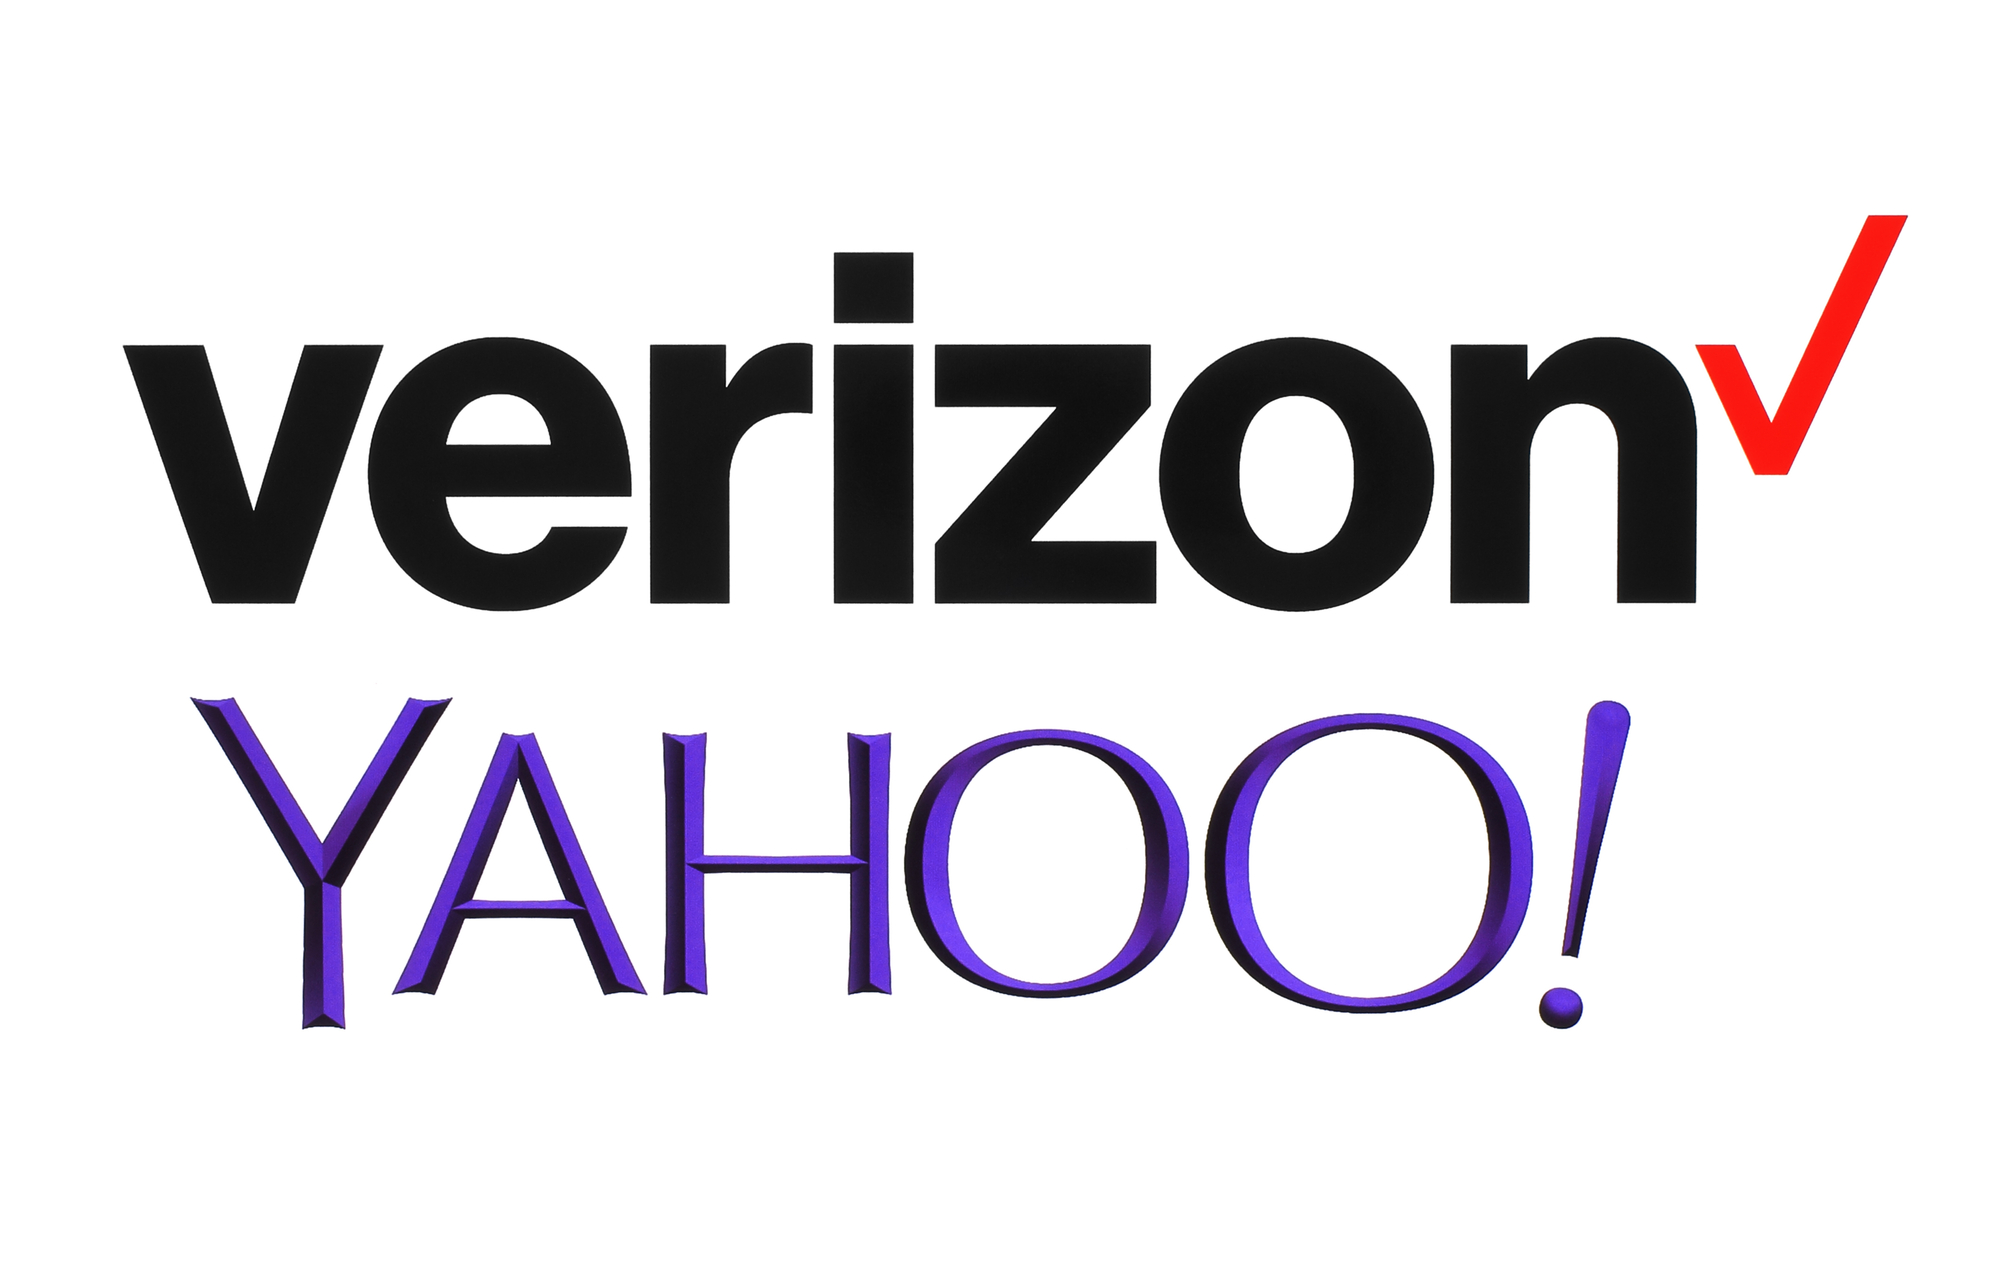 The Yahoo and Verizon symbol